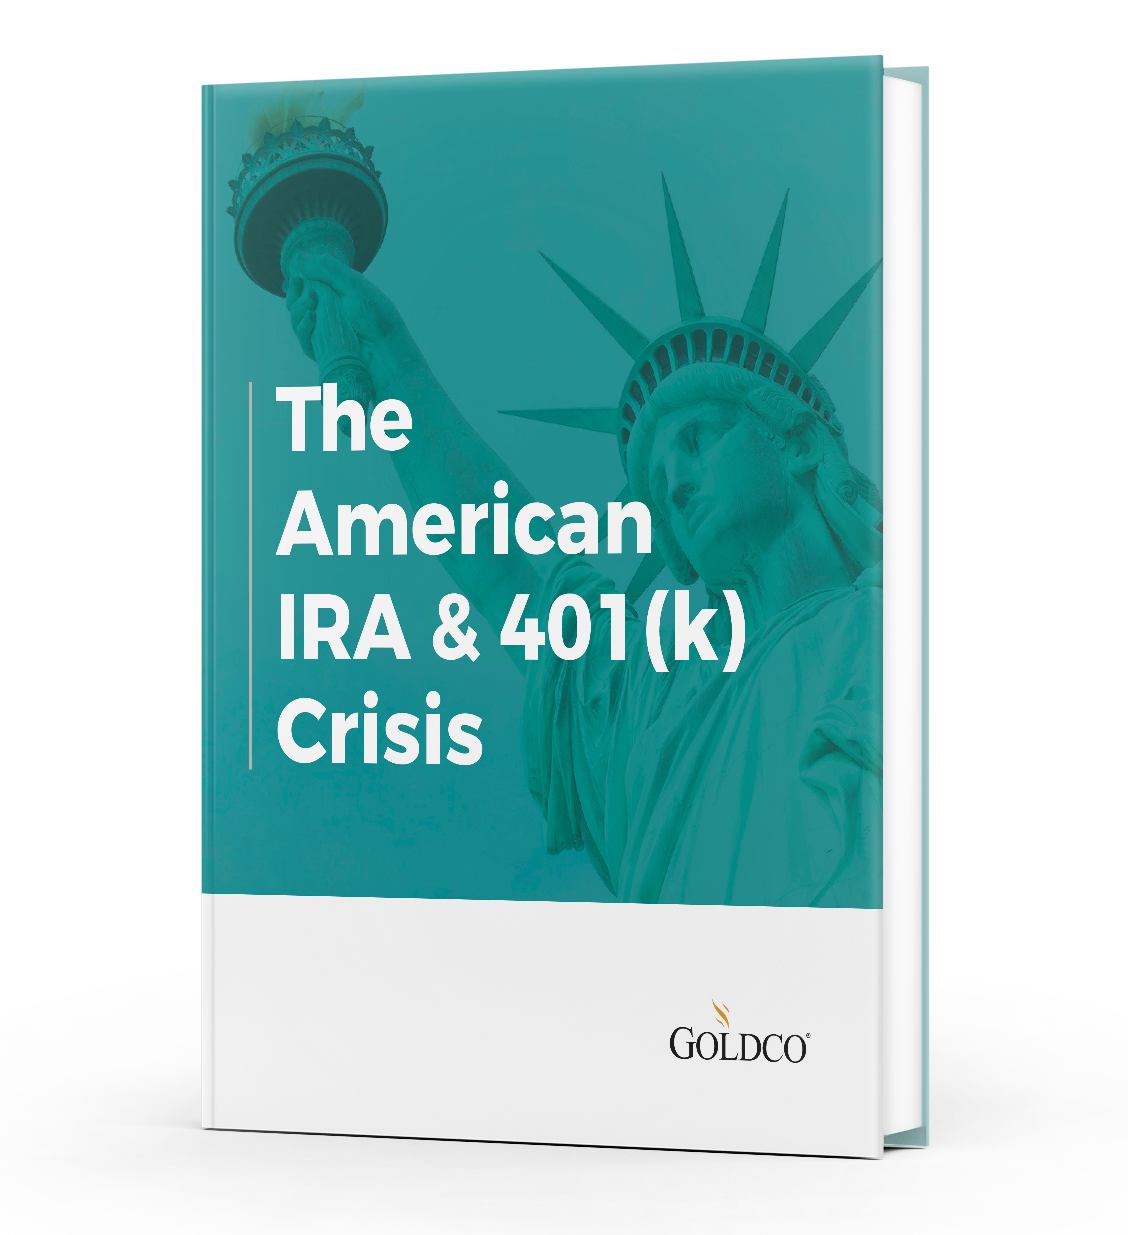 The American IRA & 401(k) Crisis